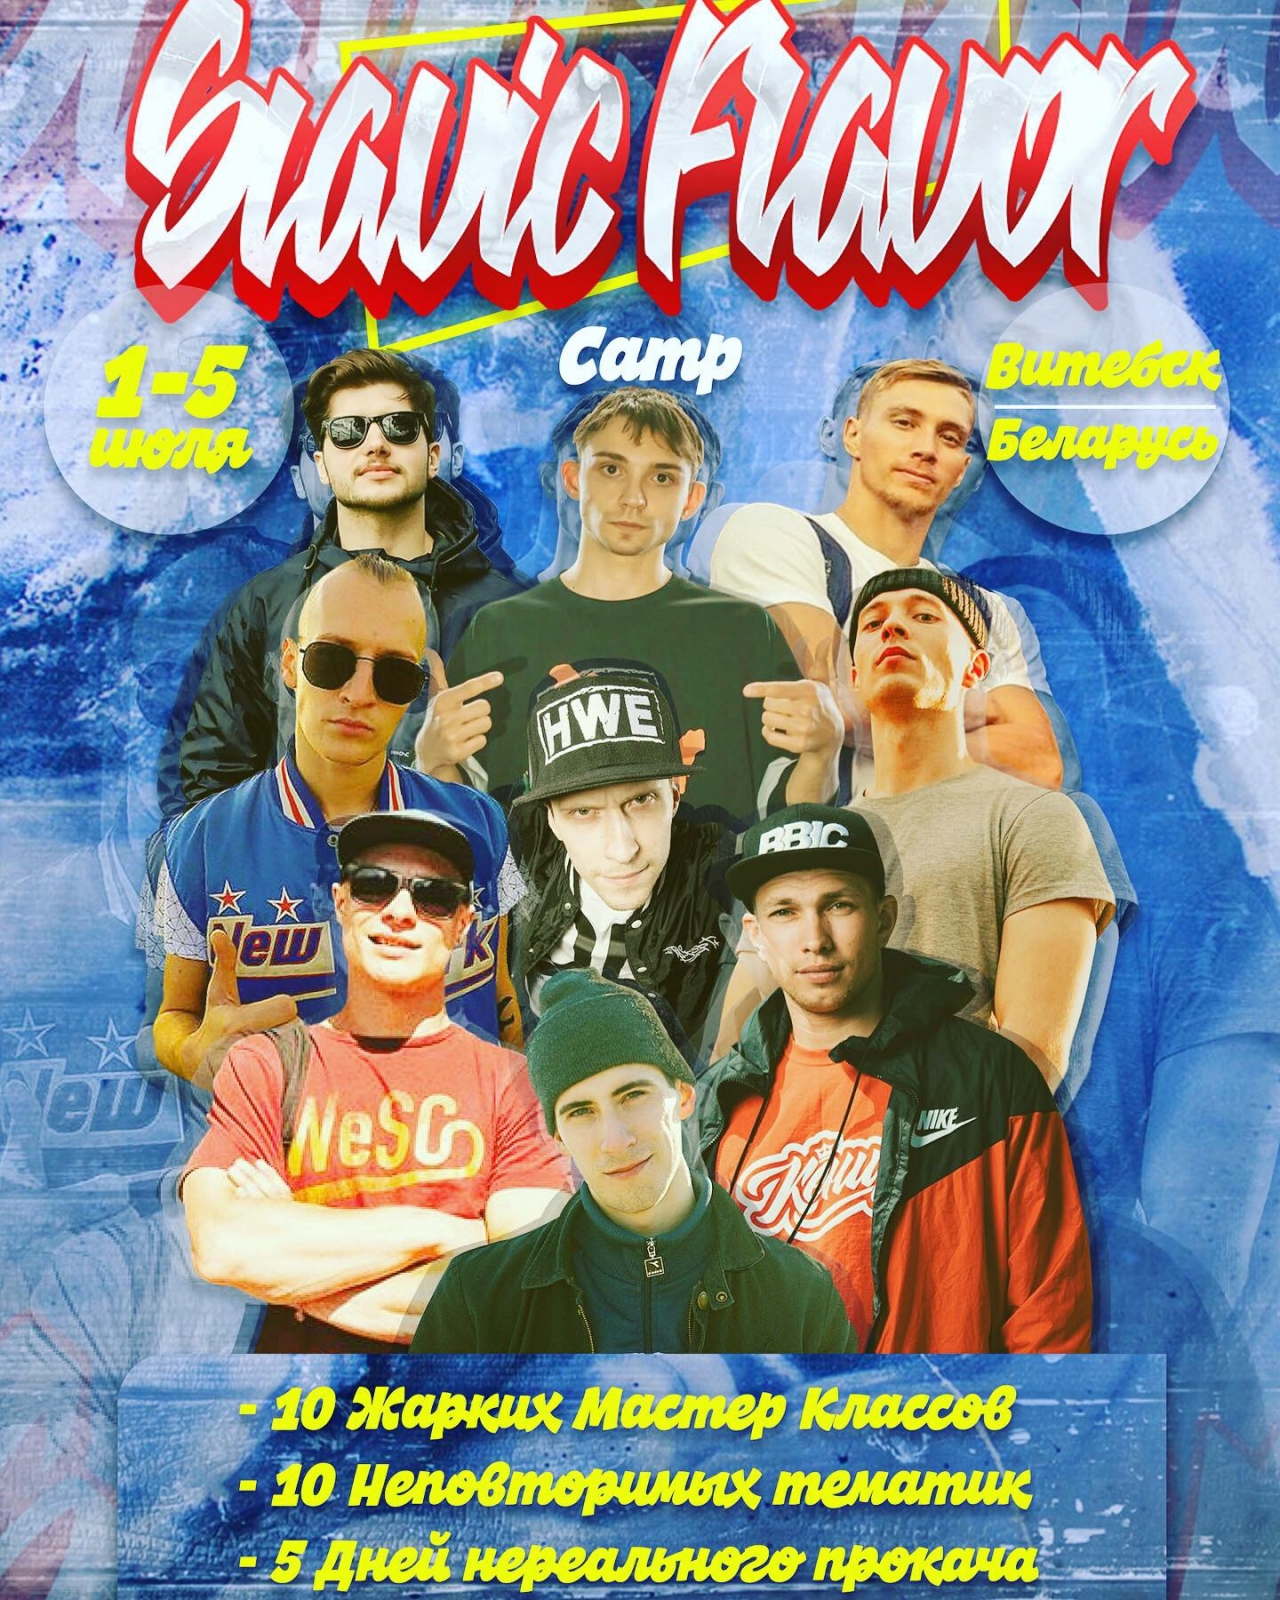 Slavic Flavor camp poster